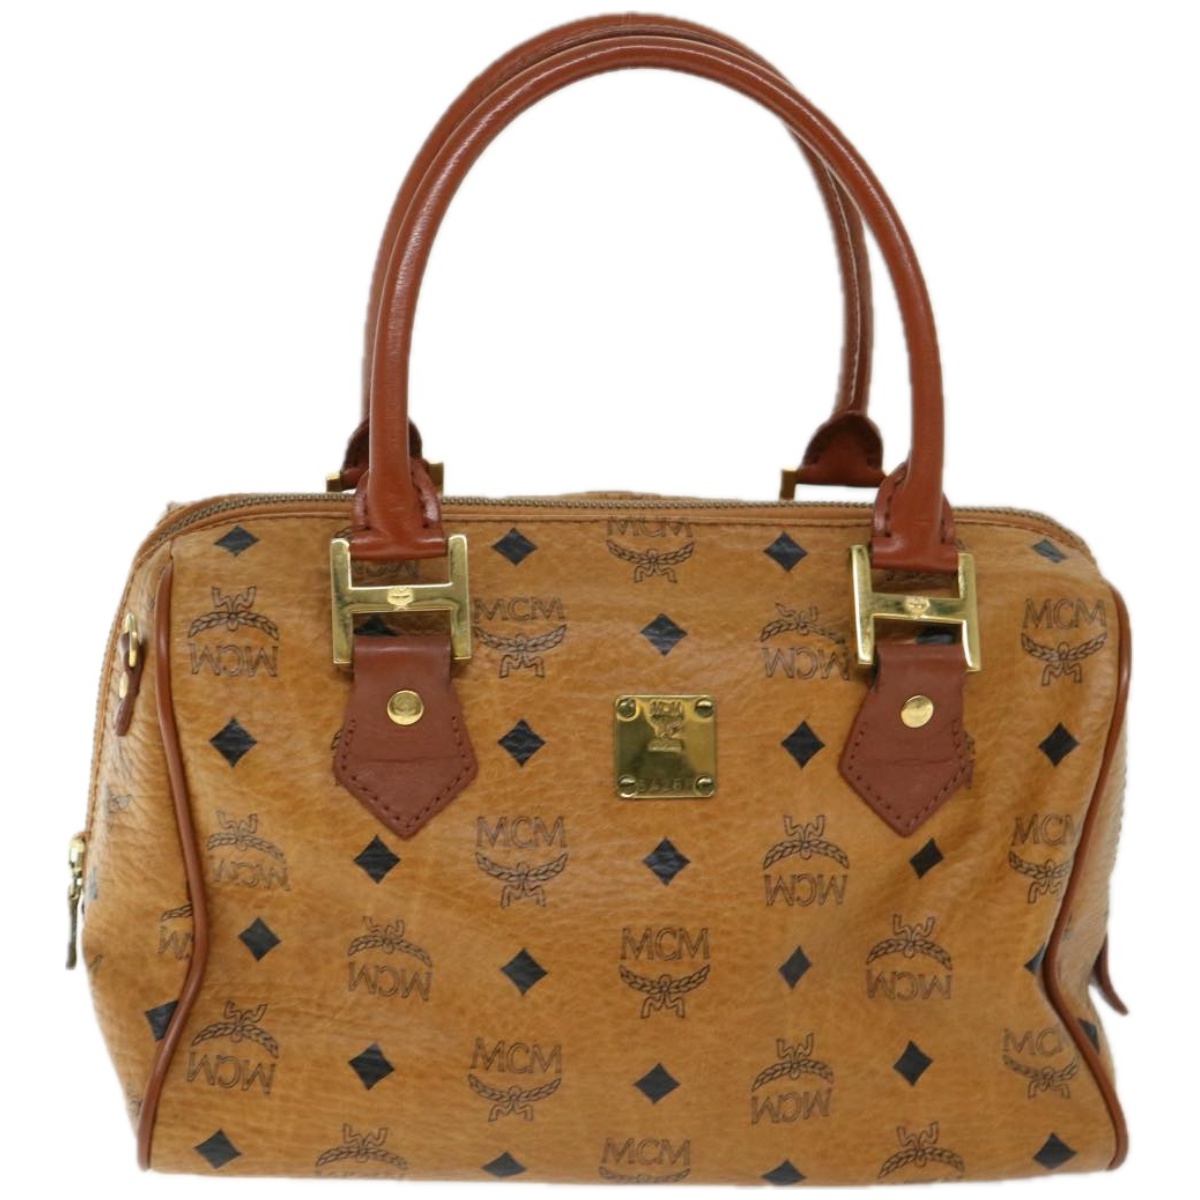 Brown Canvas Handbag with Timeless Design - Good Condition